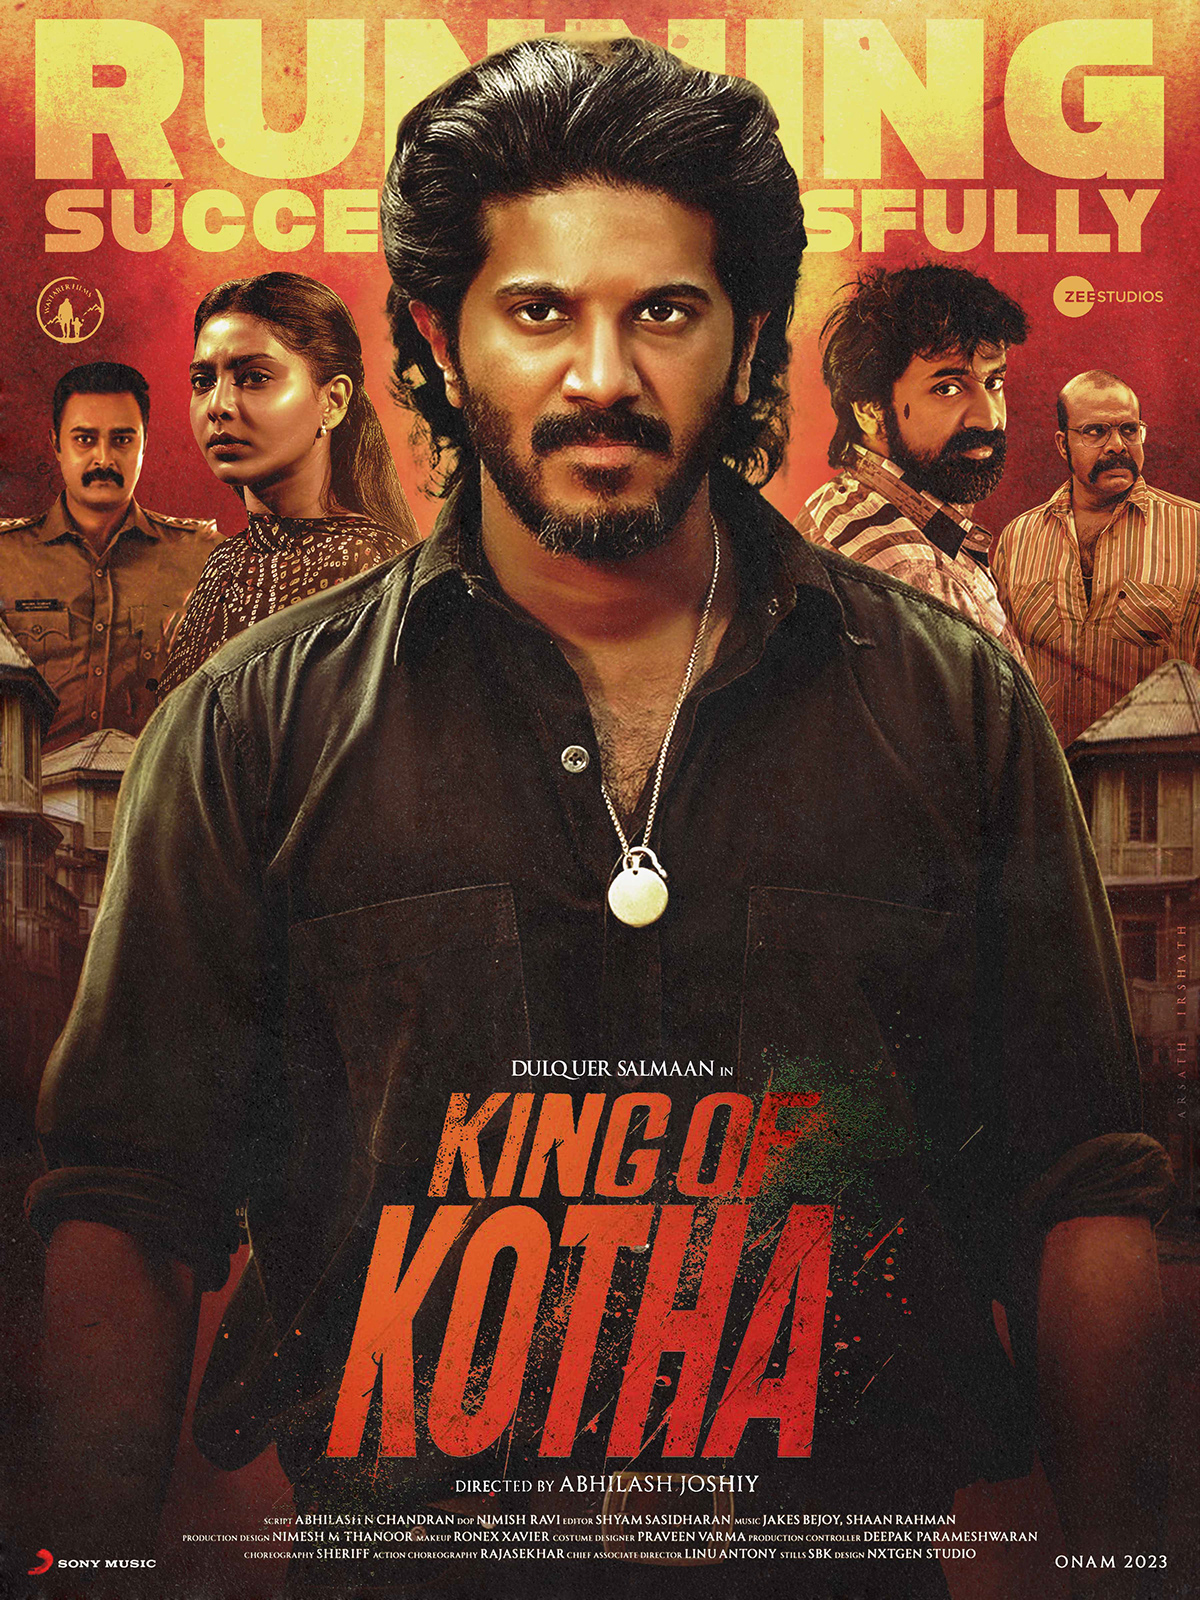 King Of Kotha Kok Dulquer Salmaan posterdesign posters Arsath Irshath 4not4studios fanmade DQ